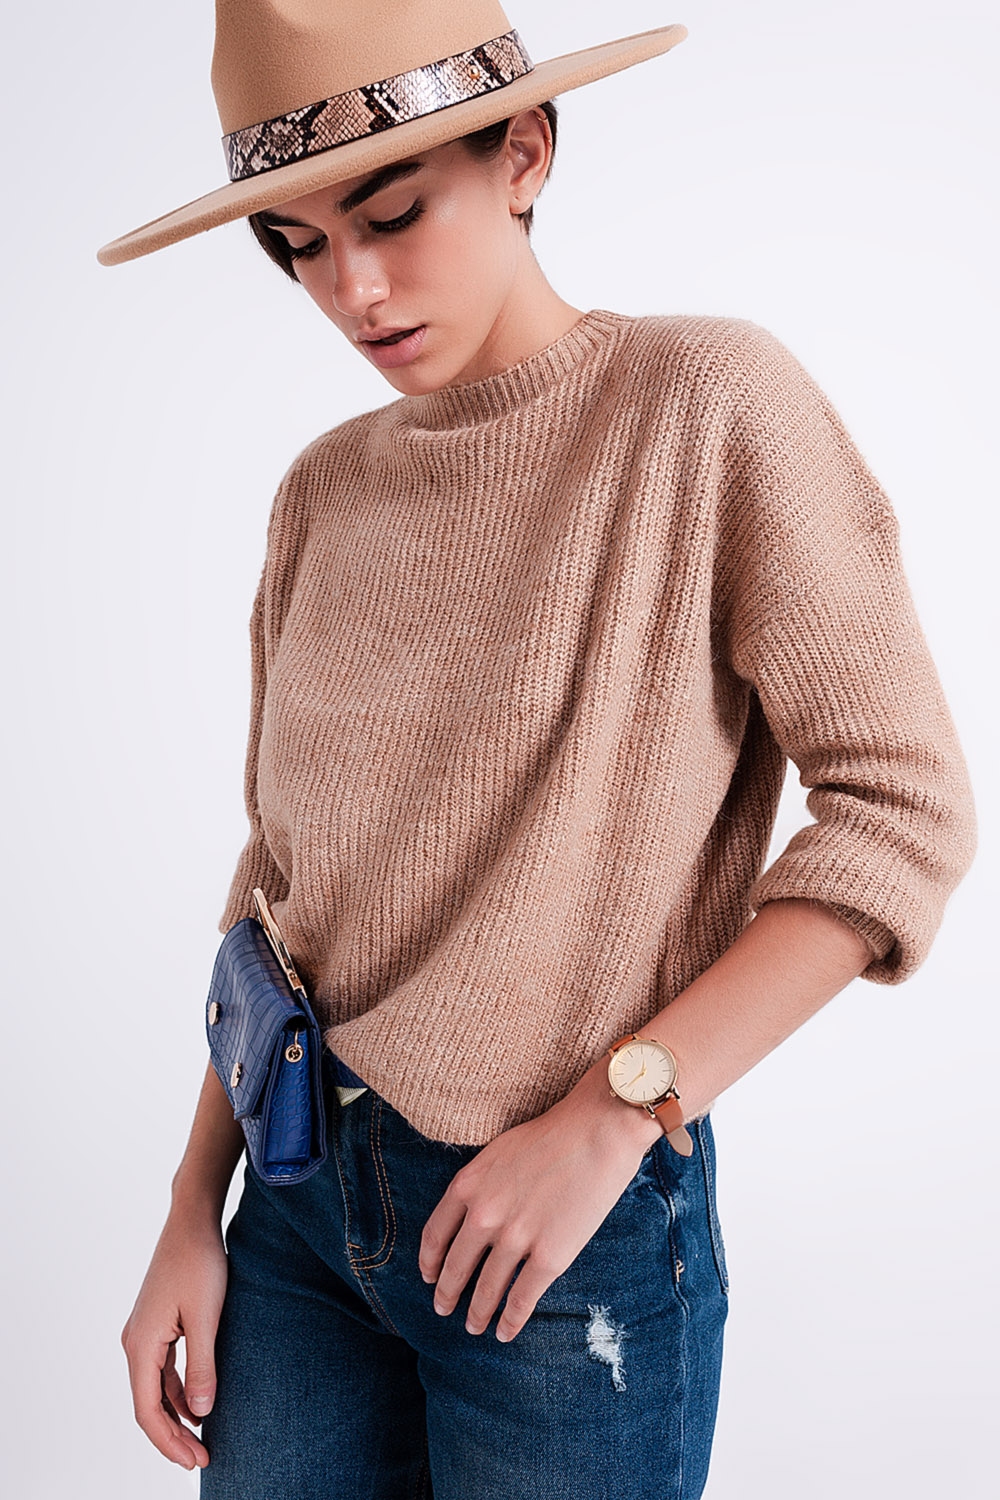 Trui Winter Must taupe licht bruin bruine dames truien-met- korte col dikke warme trendy fashion sweaters